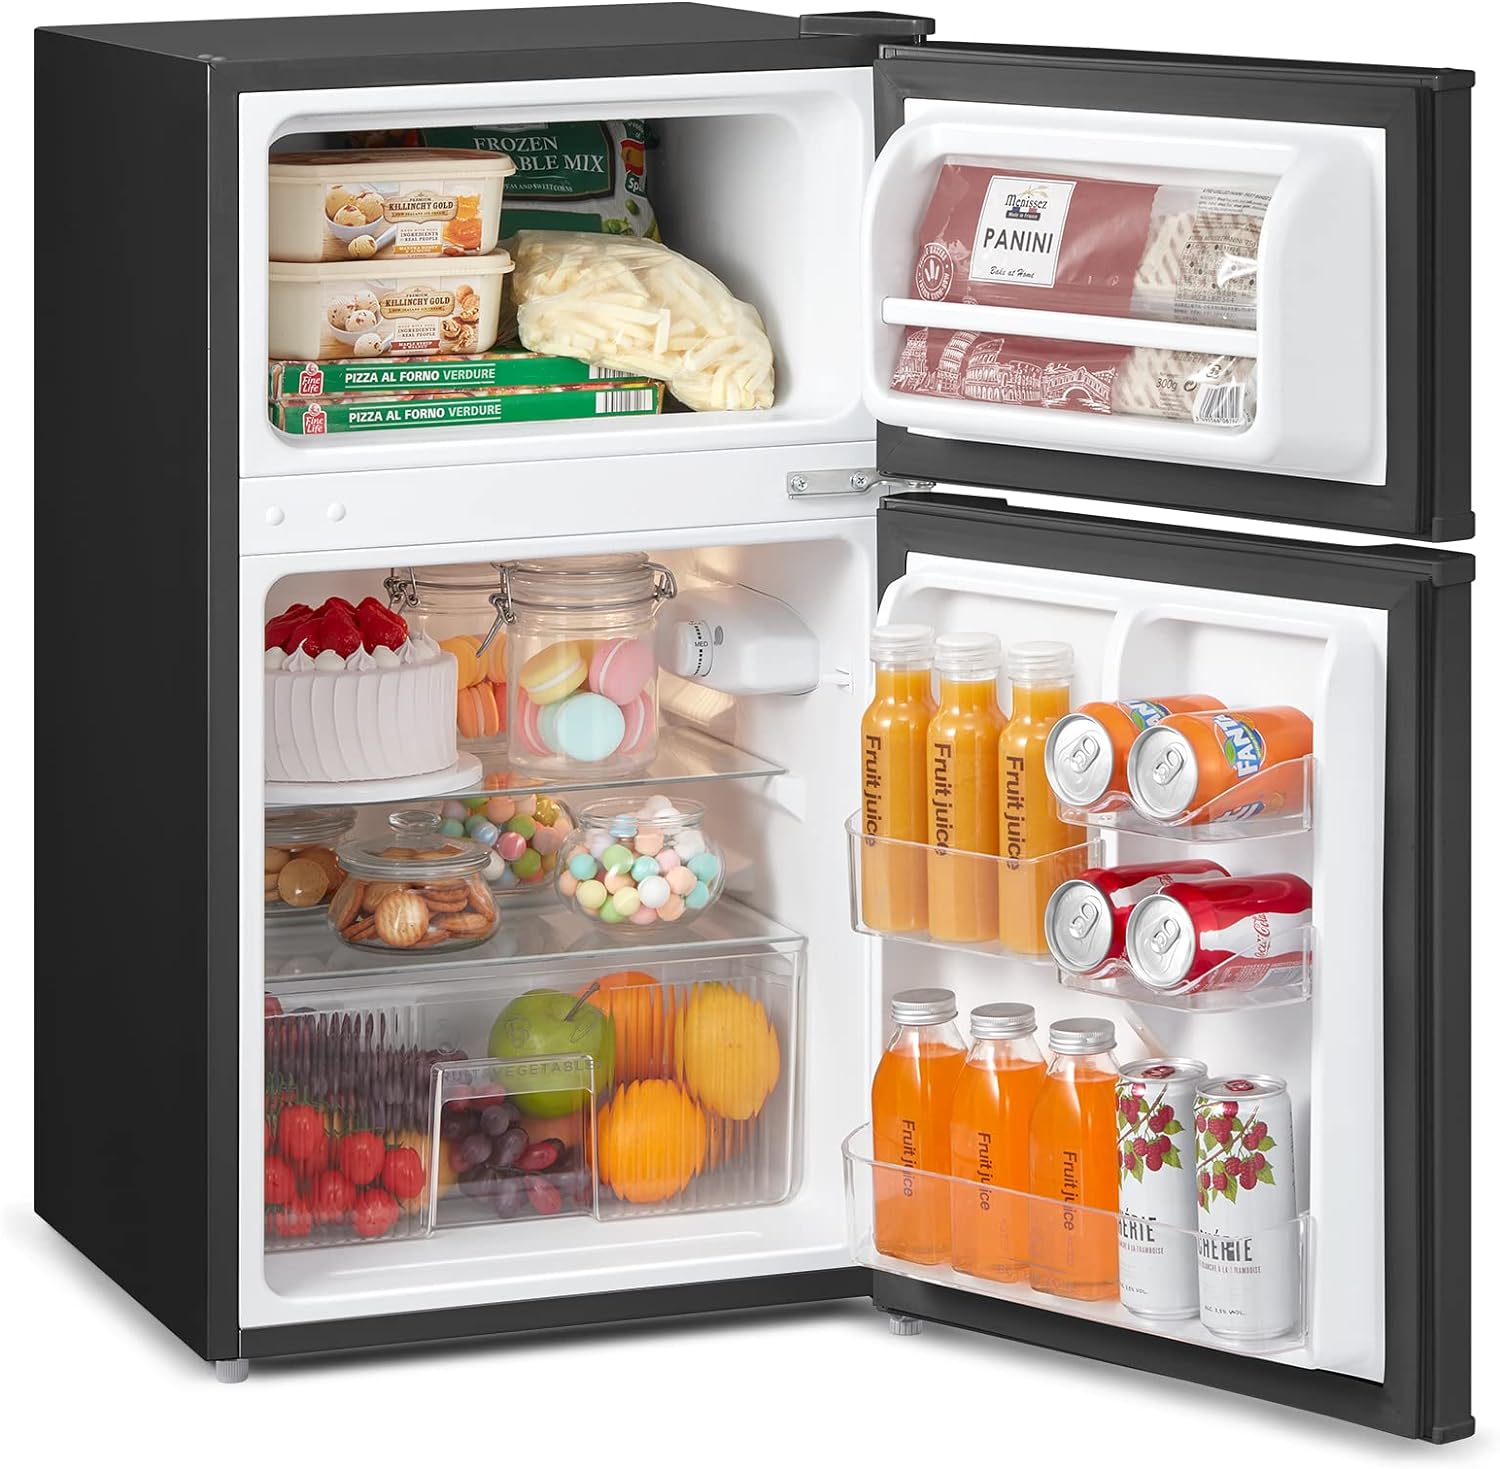 comfee rct87bl1e under counter fridge freezer review